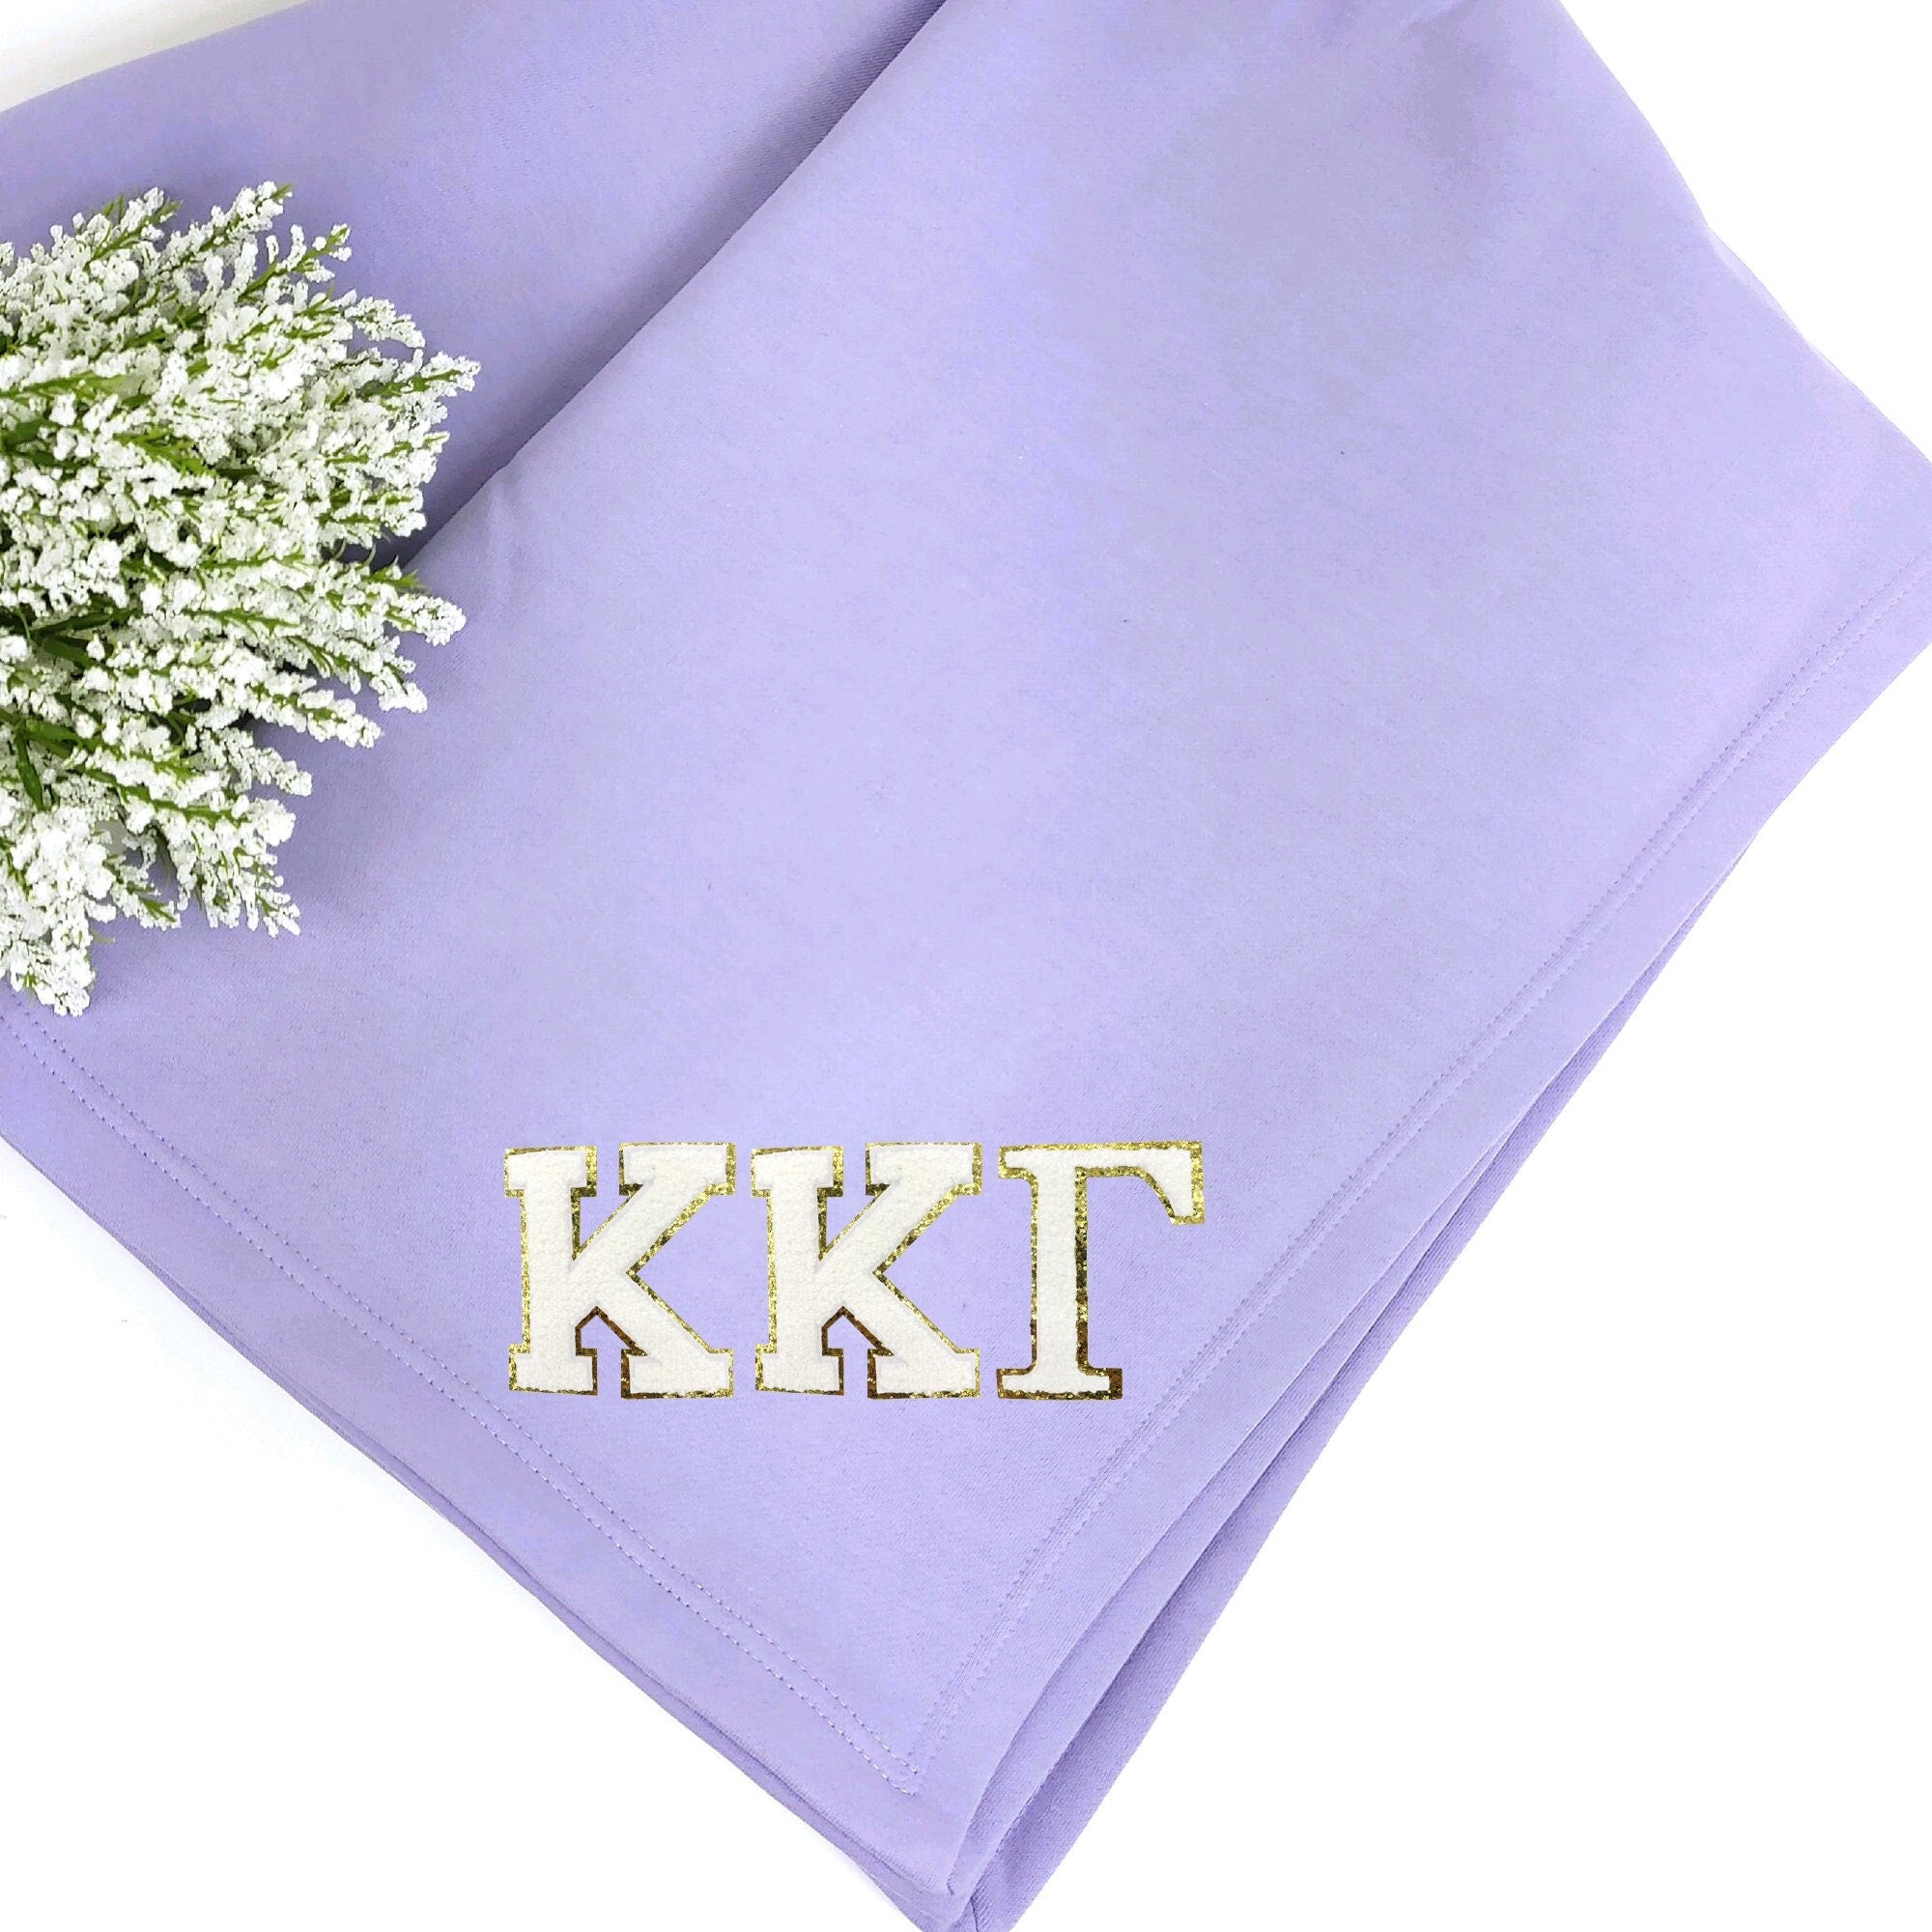 Kappa Kappa Gamma Patch Sweatshirt Blanket, Warm and Cozy, Soft Chenille Greek Patch